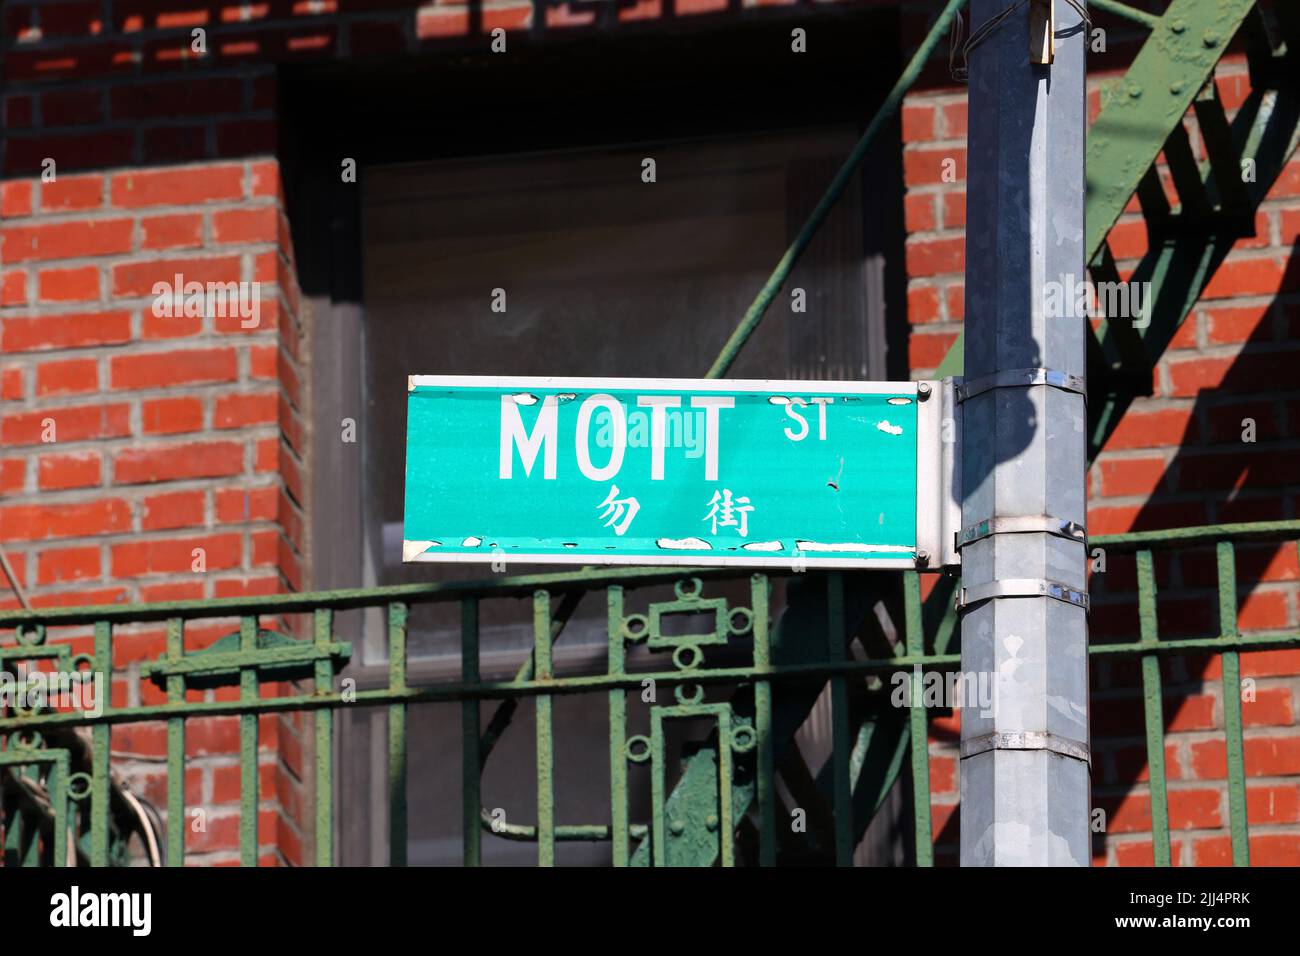 Mott St 勿街 street sign in Manhattan's Chinatown, New York. Mott Street sign Stock Photo